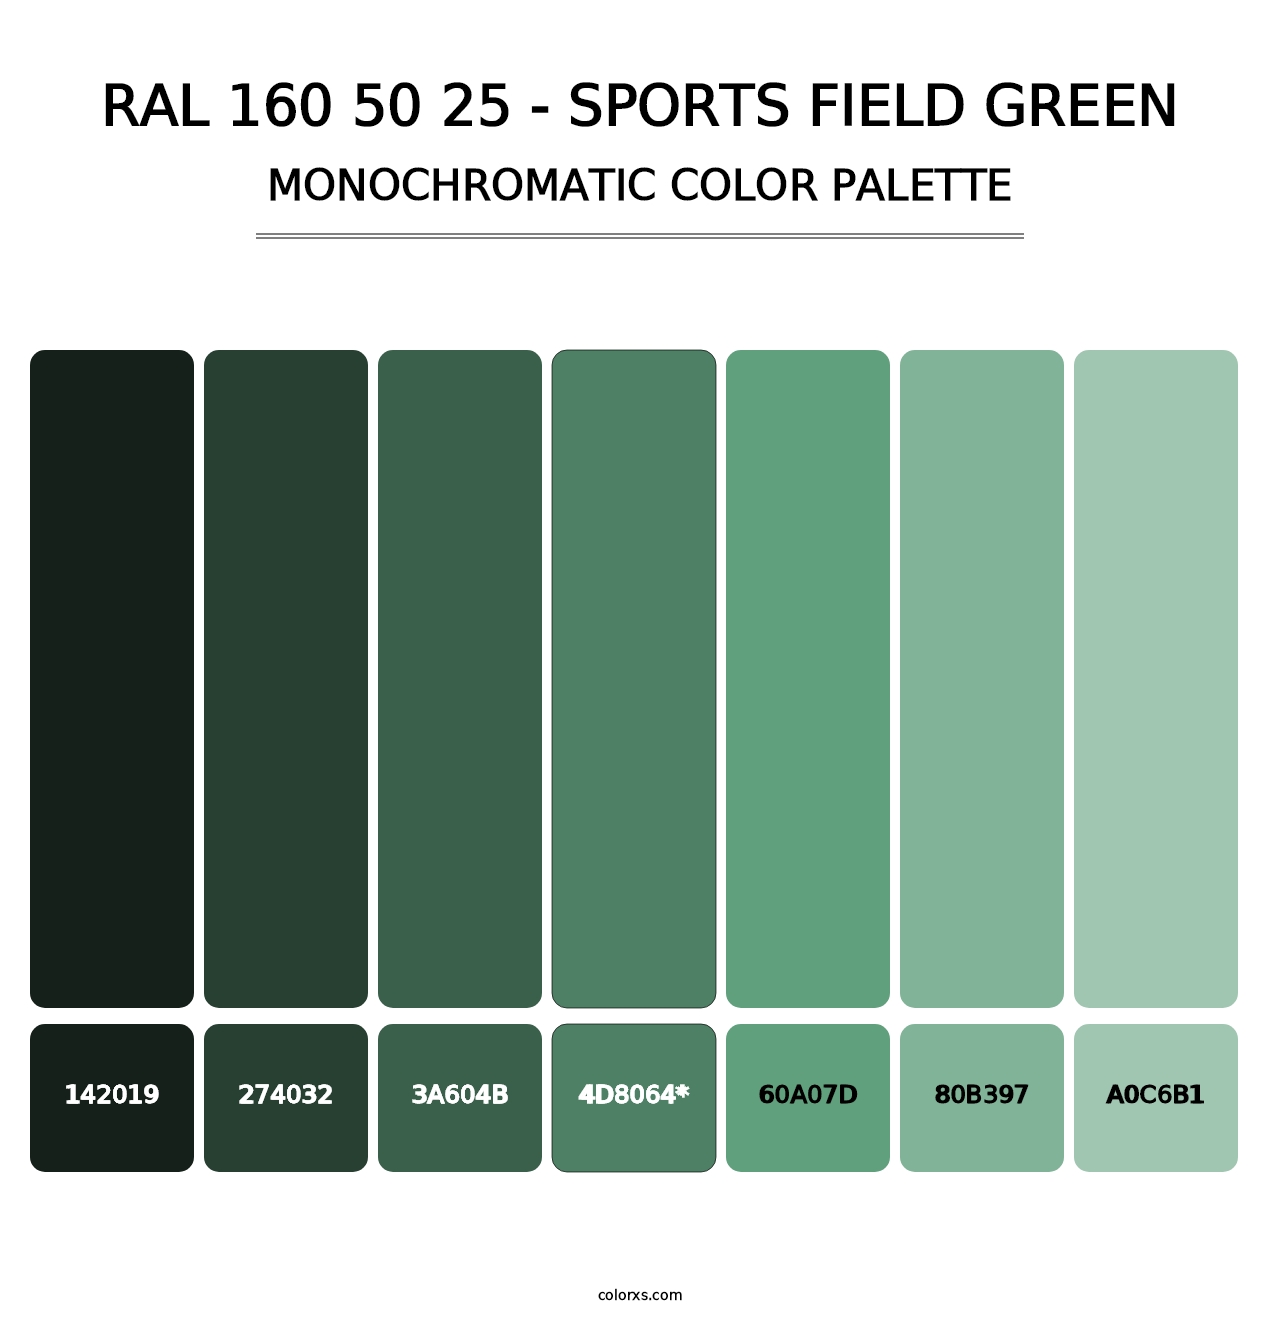 RAL 160 50 25 - Sports Field Green - Monochromatic Color Palette